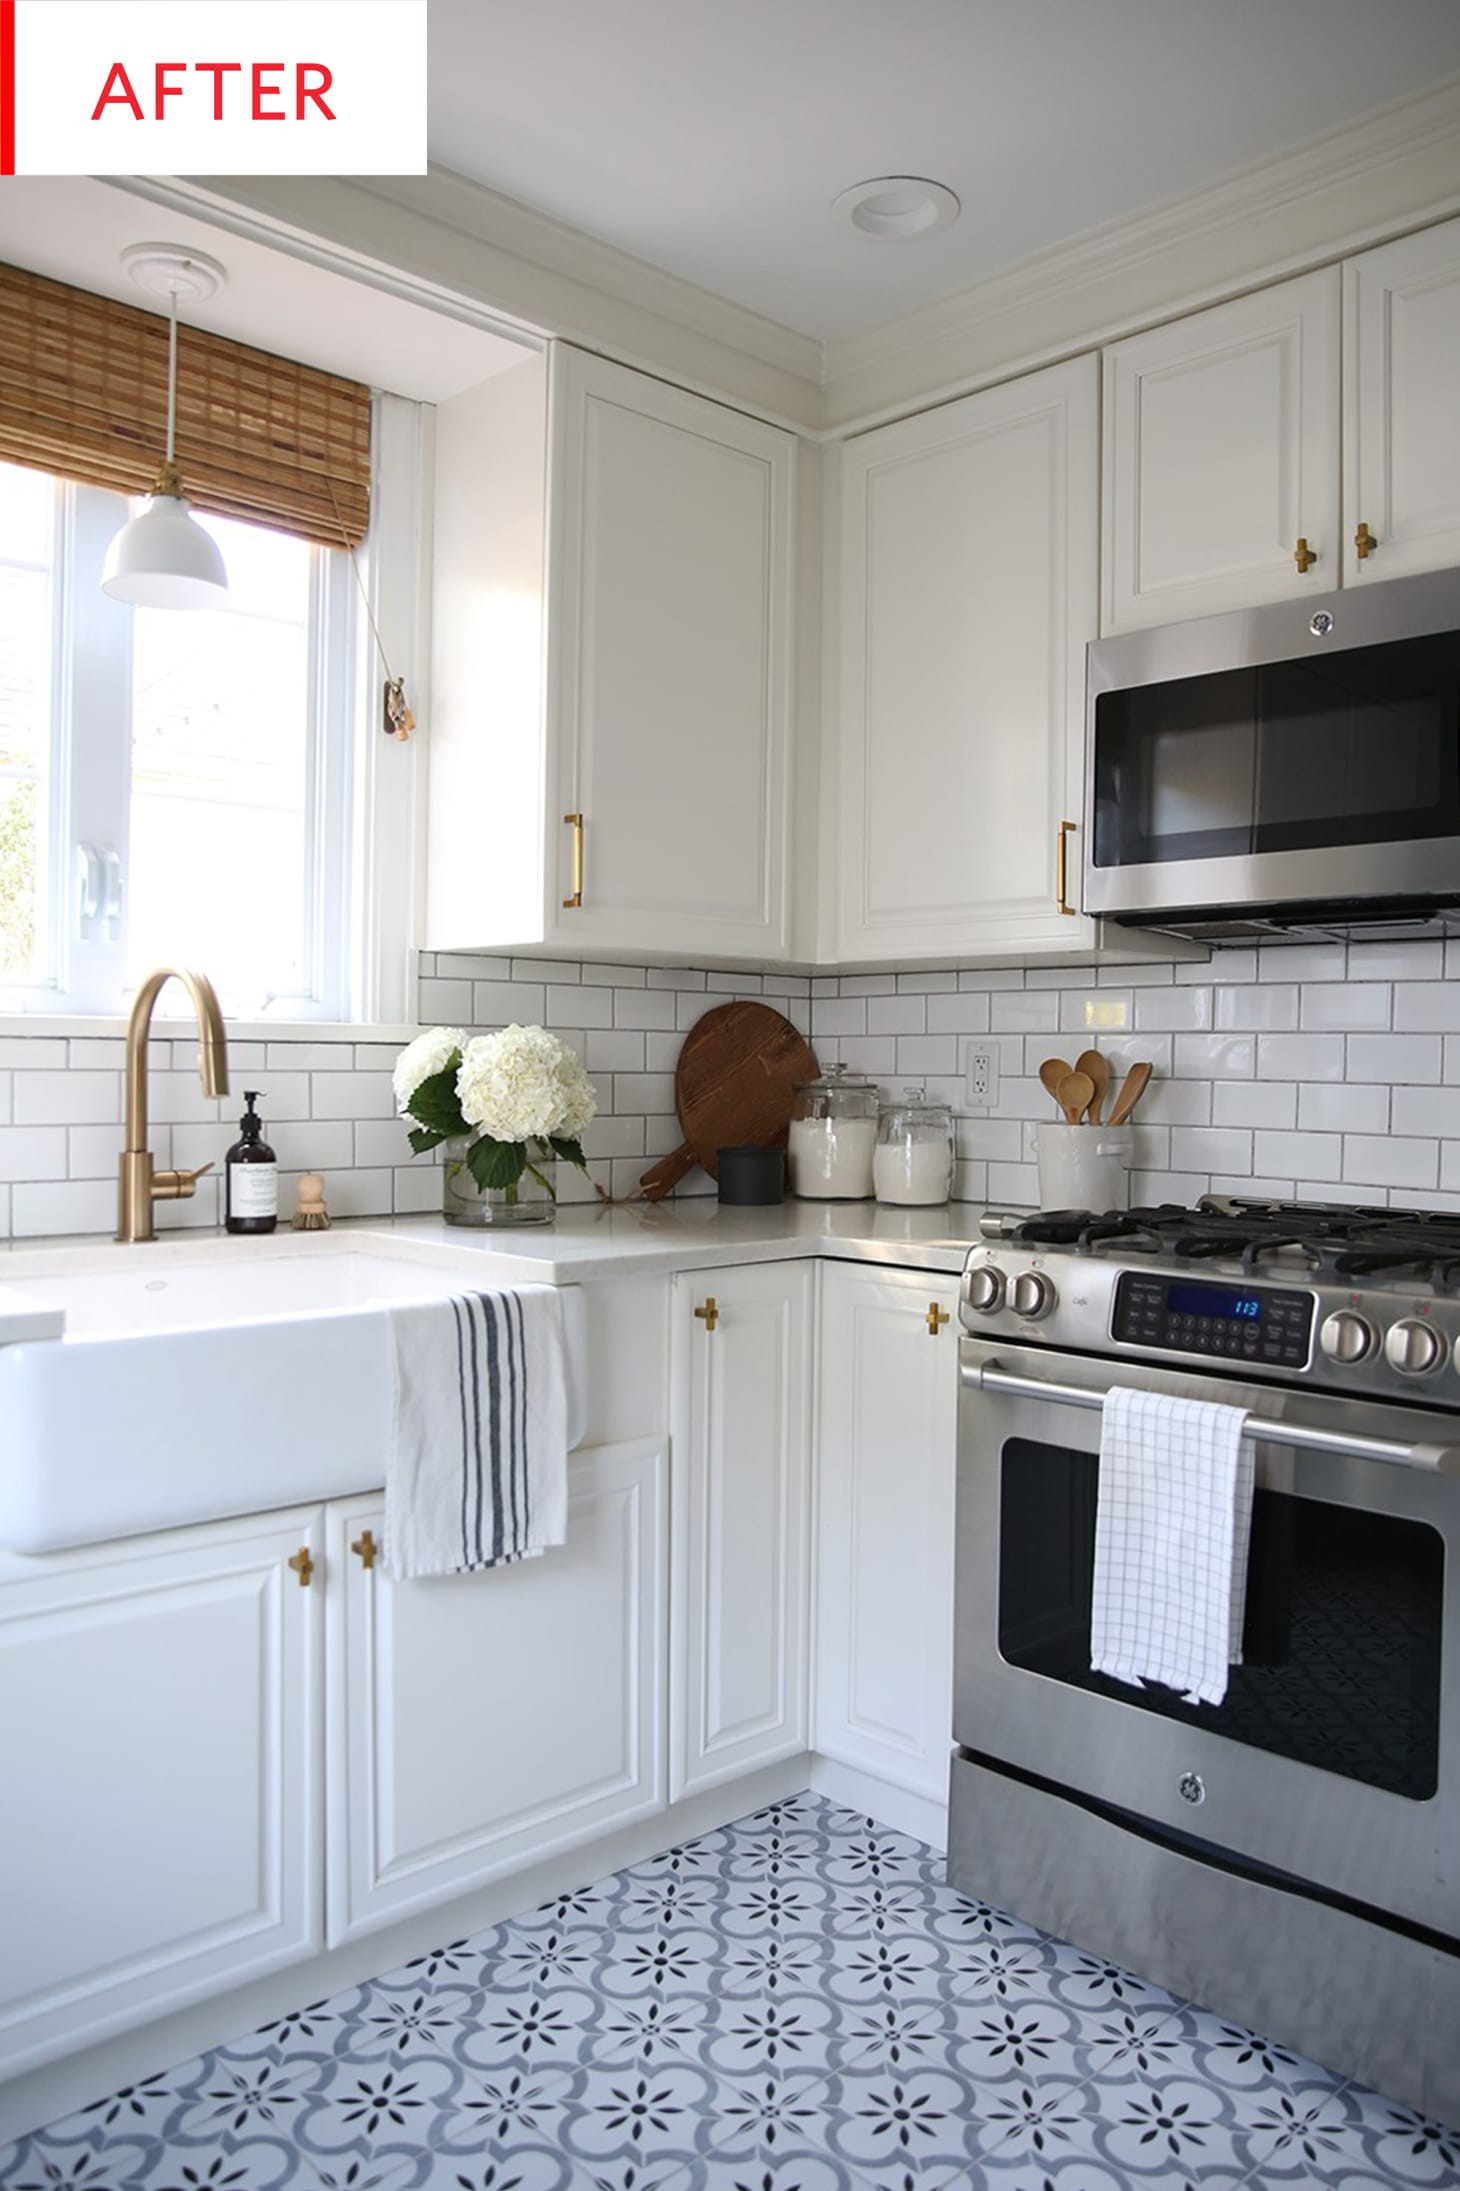 White Kitchen Hutch
 How to Update Old White Kitchen Cabinets s